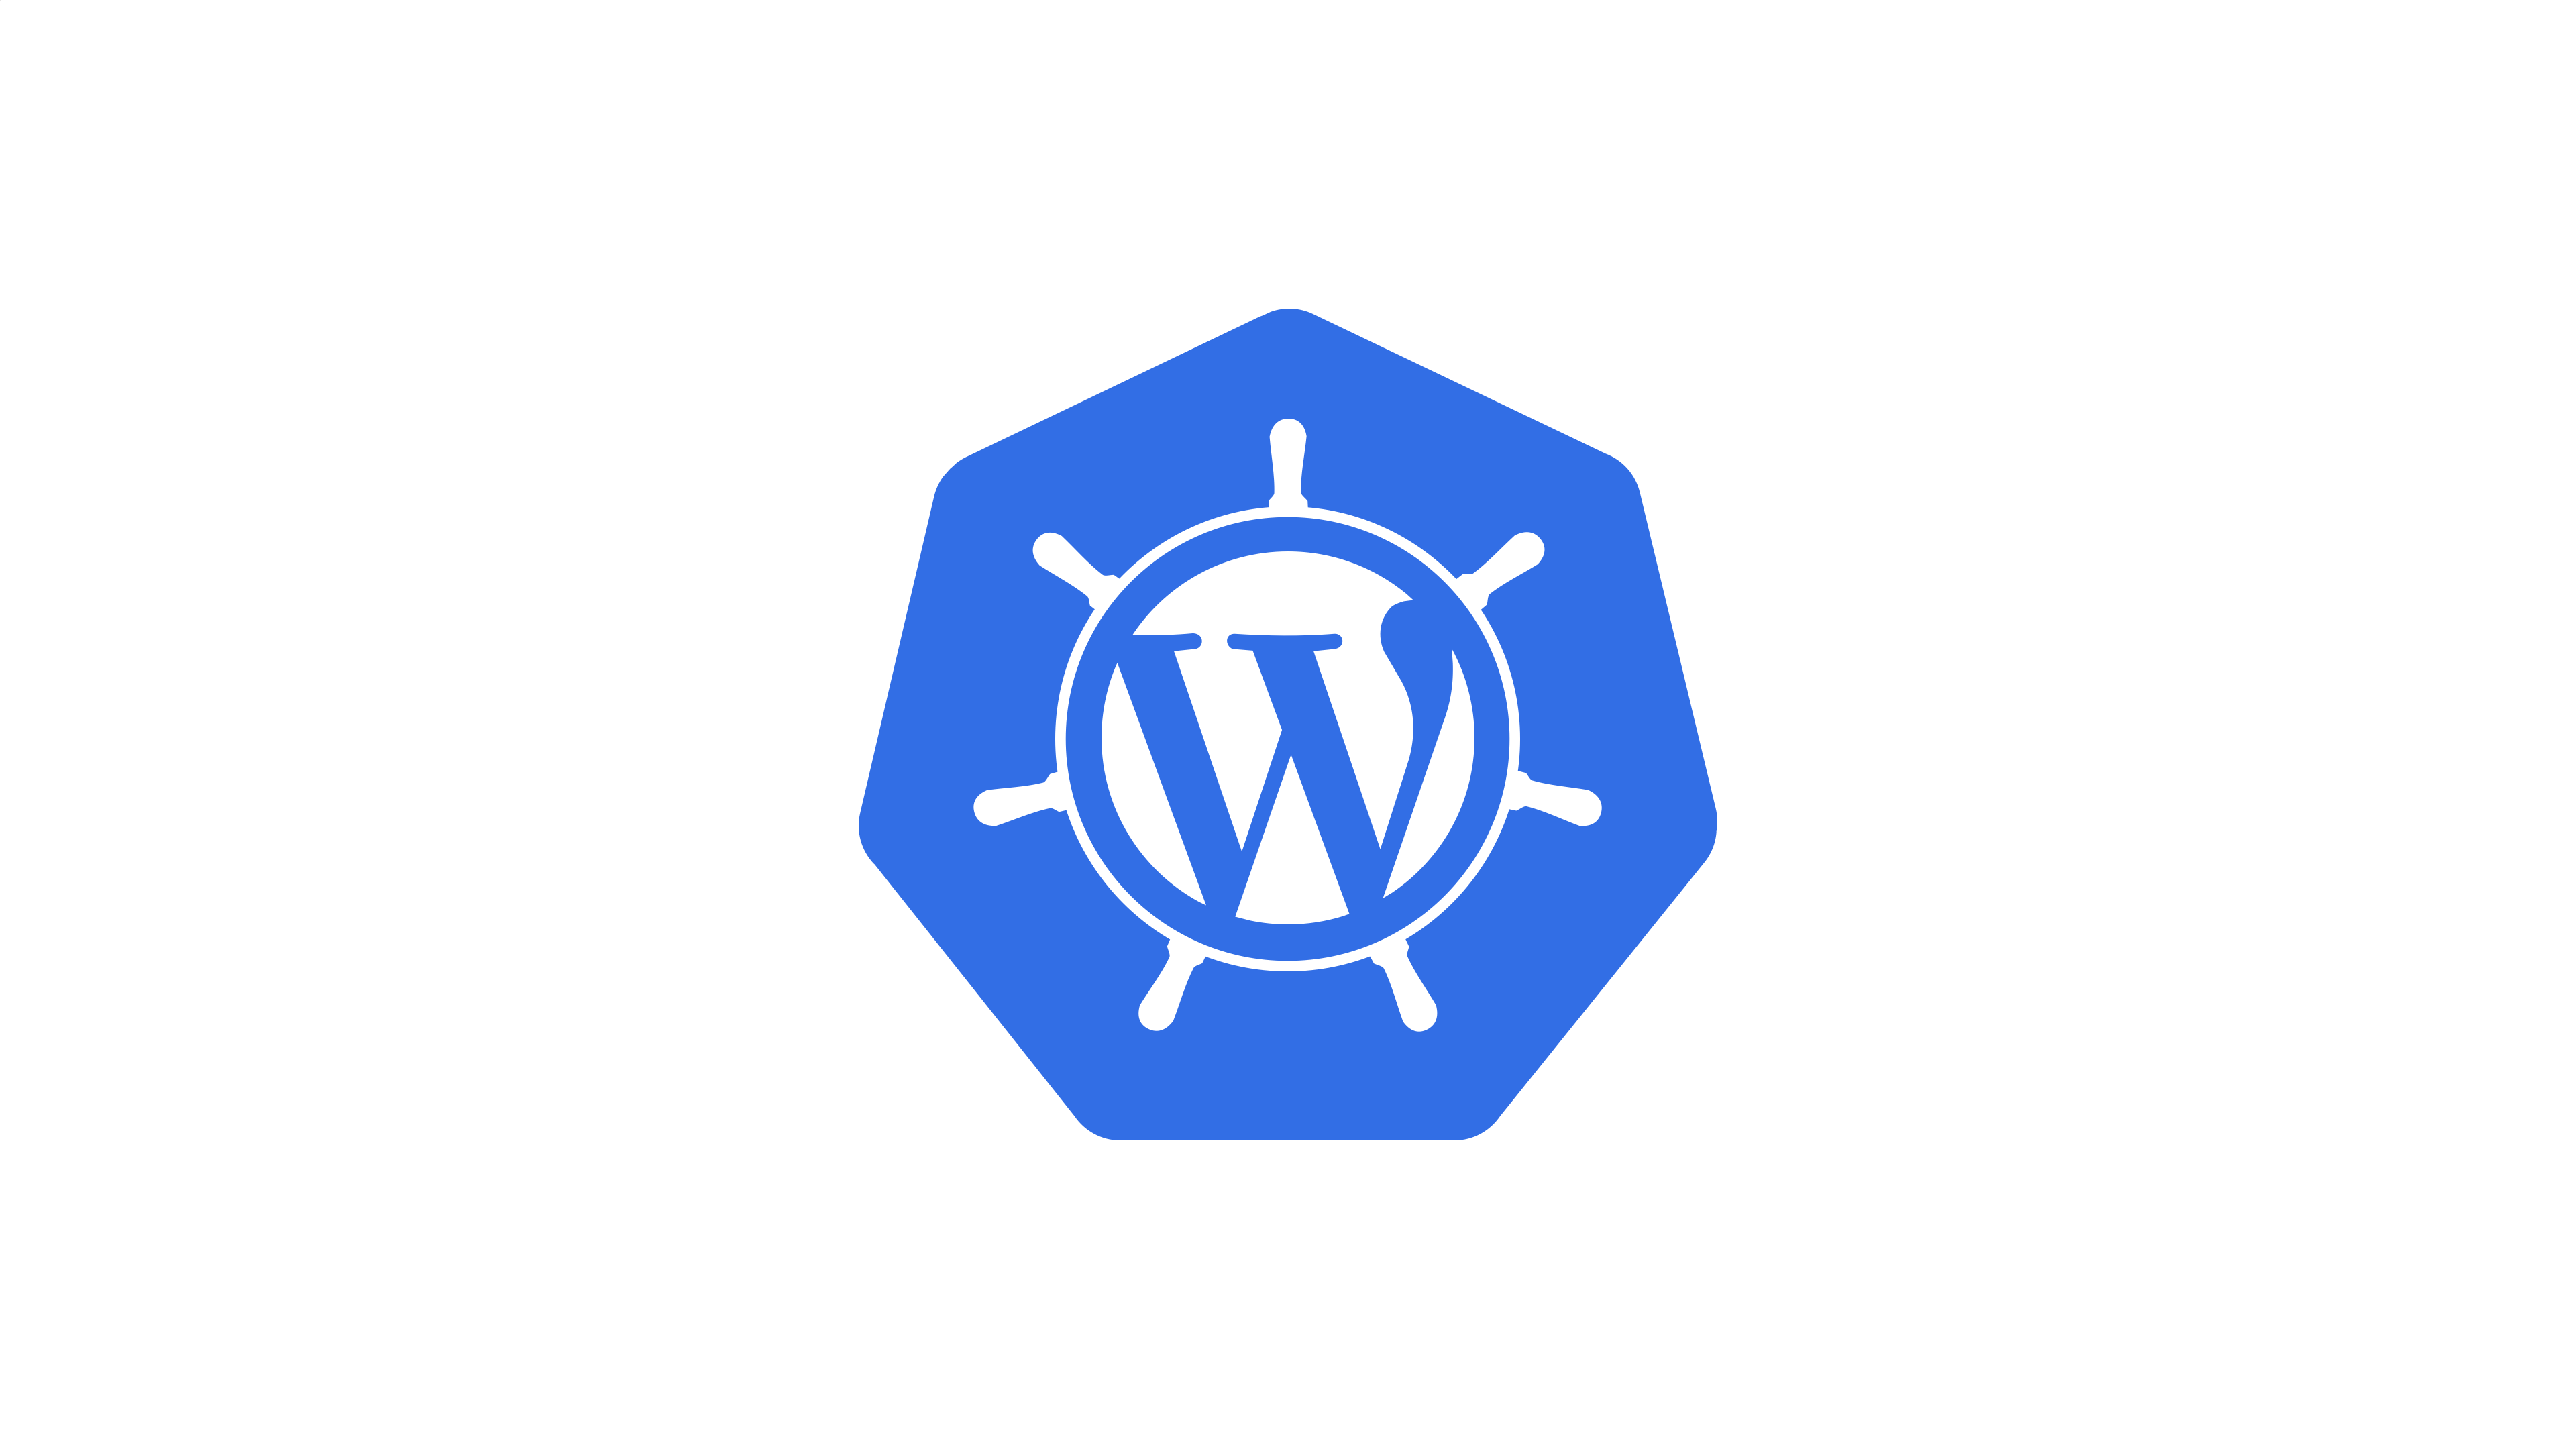 Combination of the WordPress and Kubernetes logos